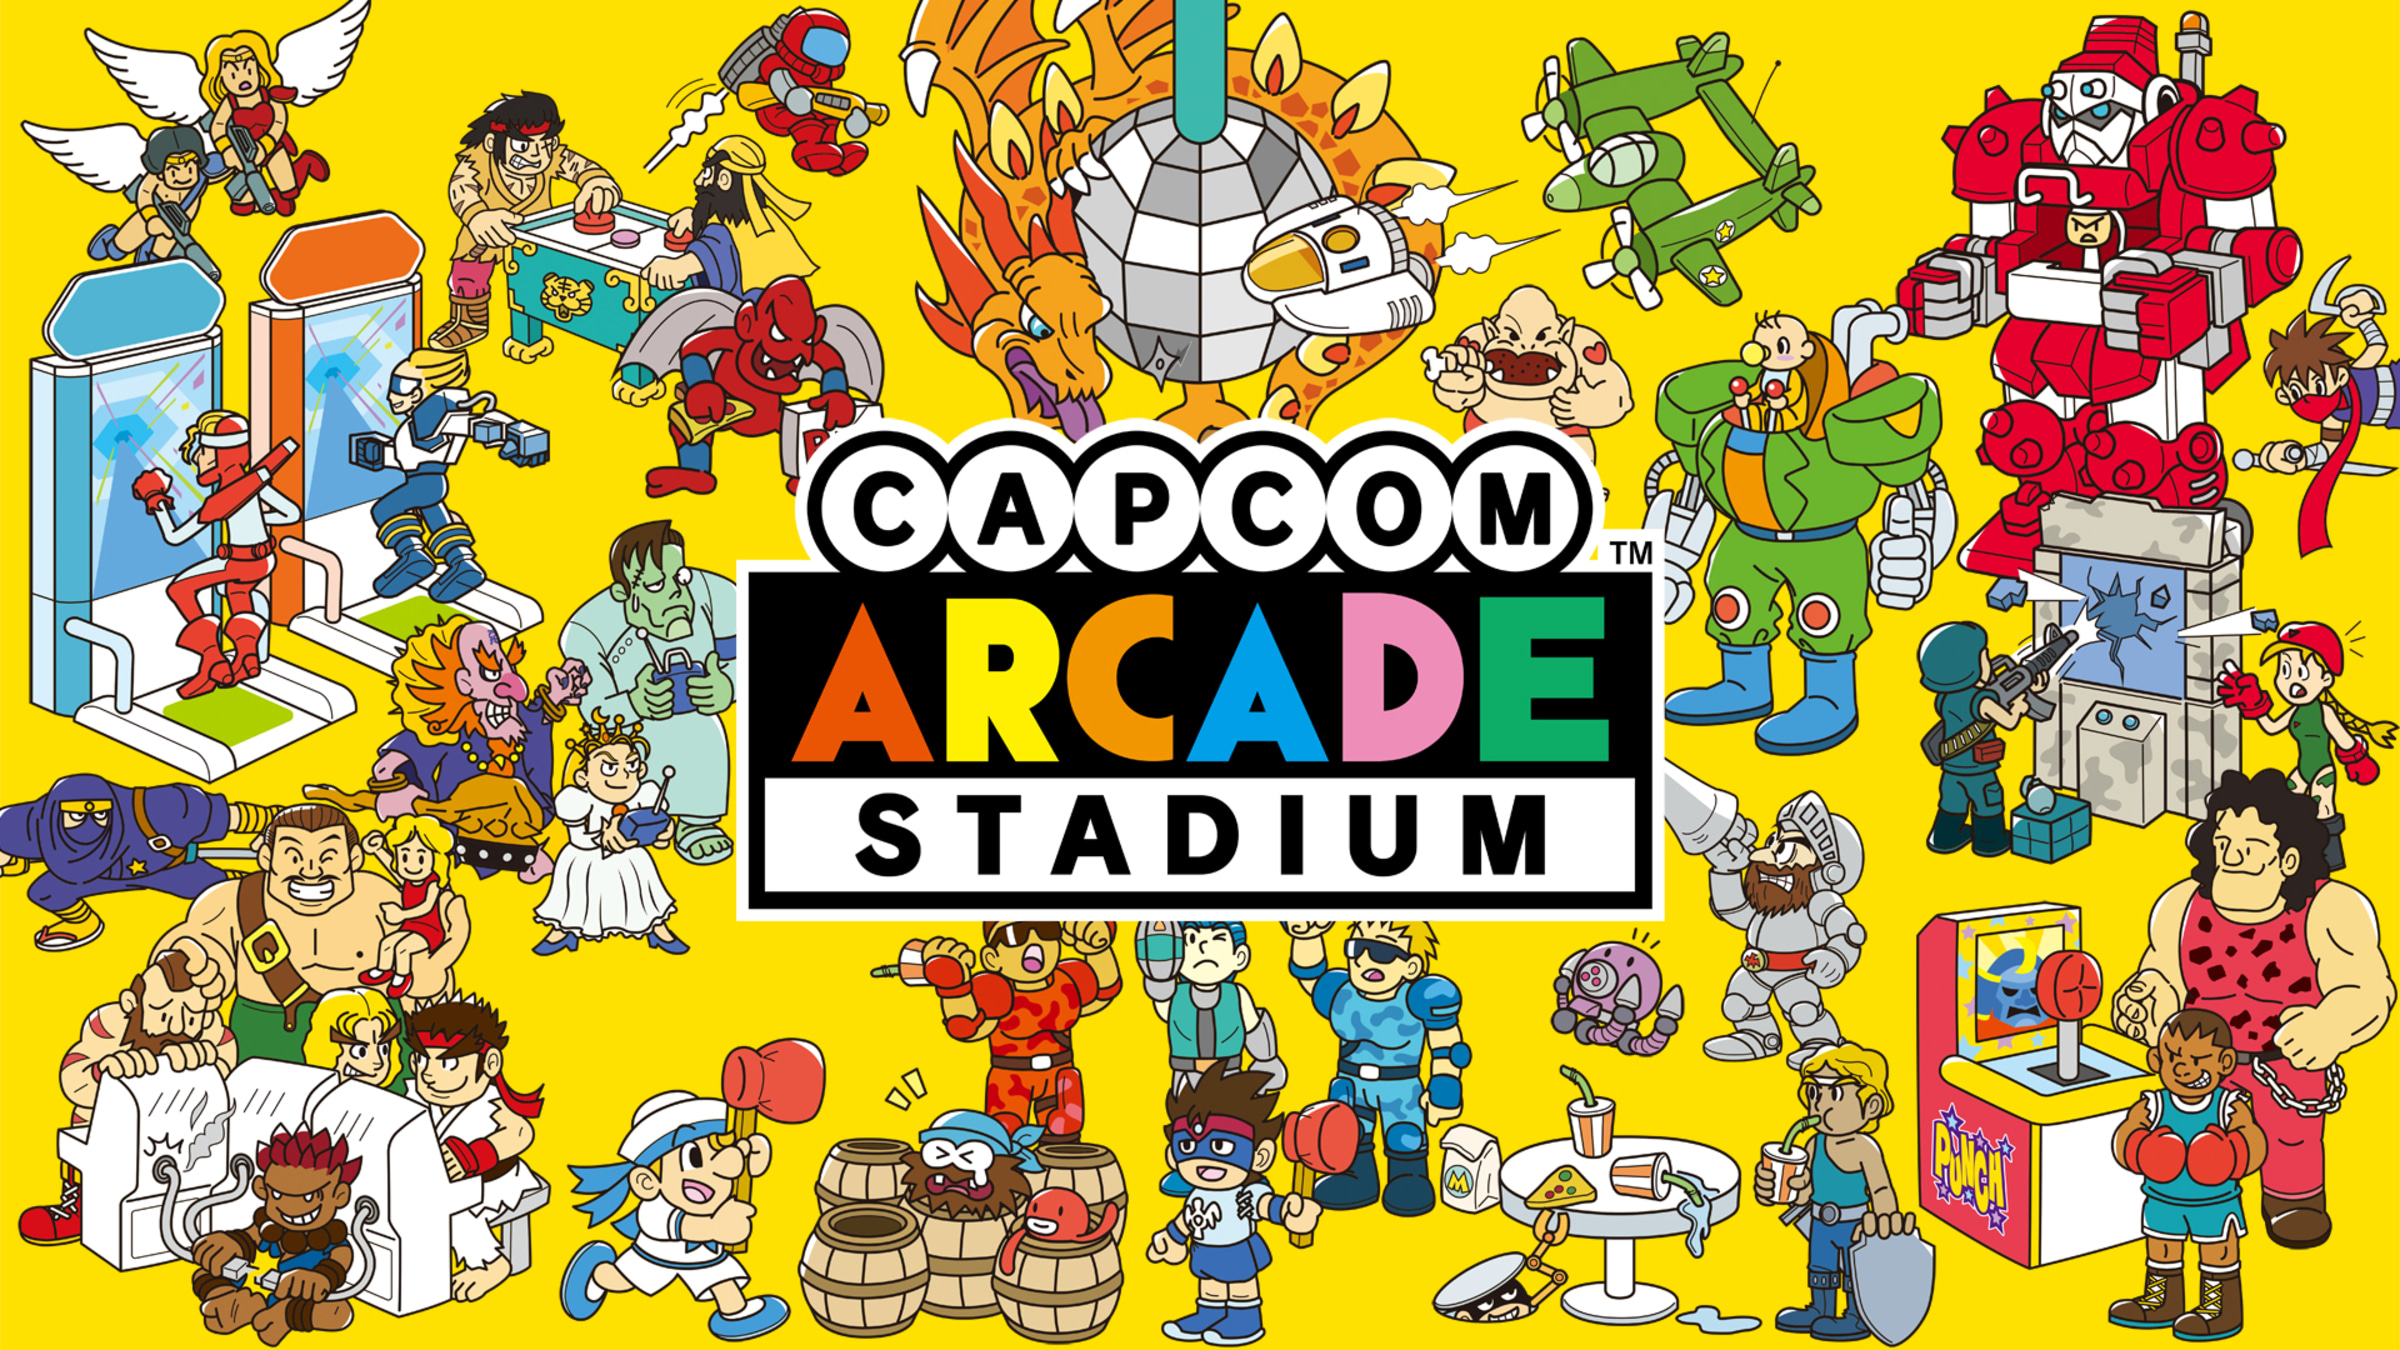 Arcade Stadium for Nintendo - Official Site